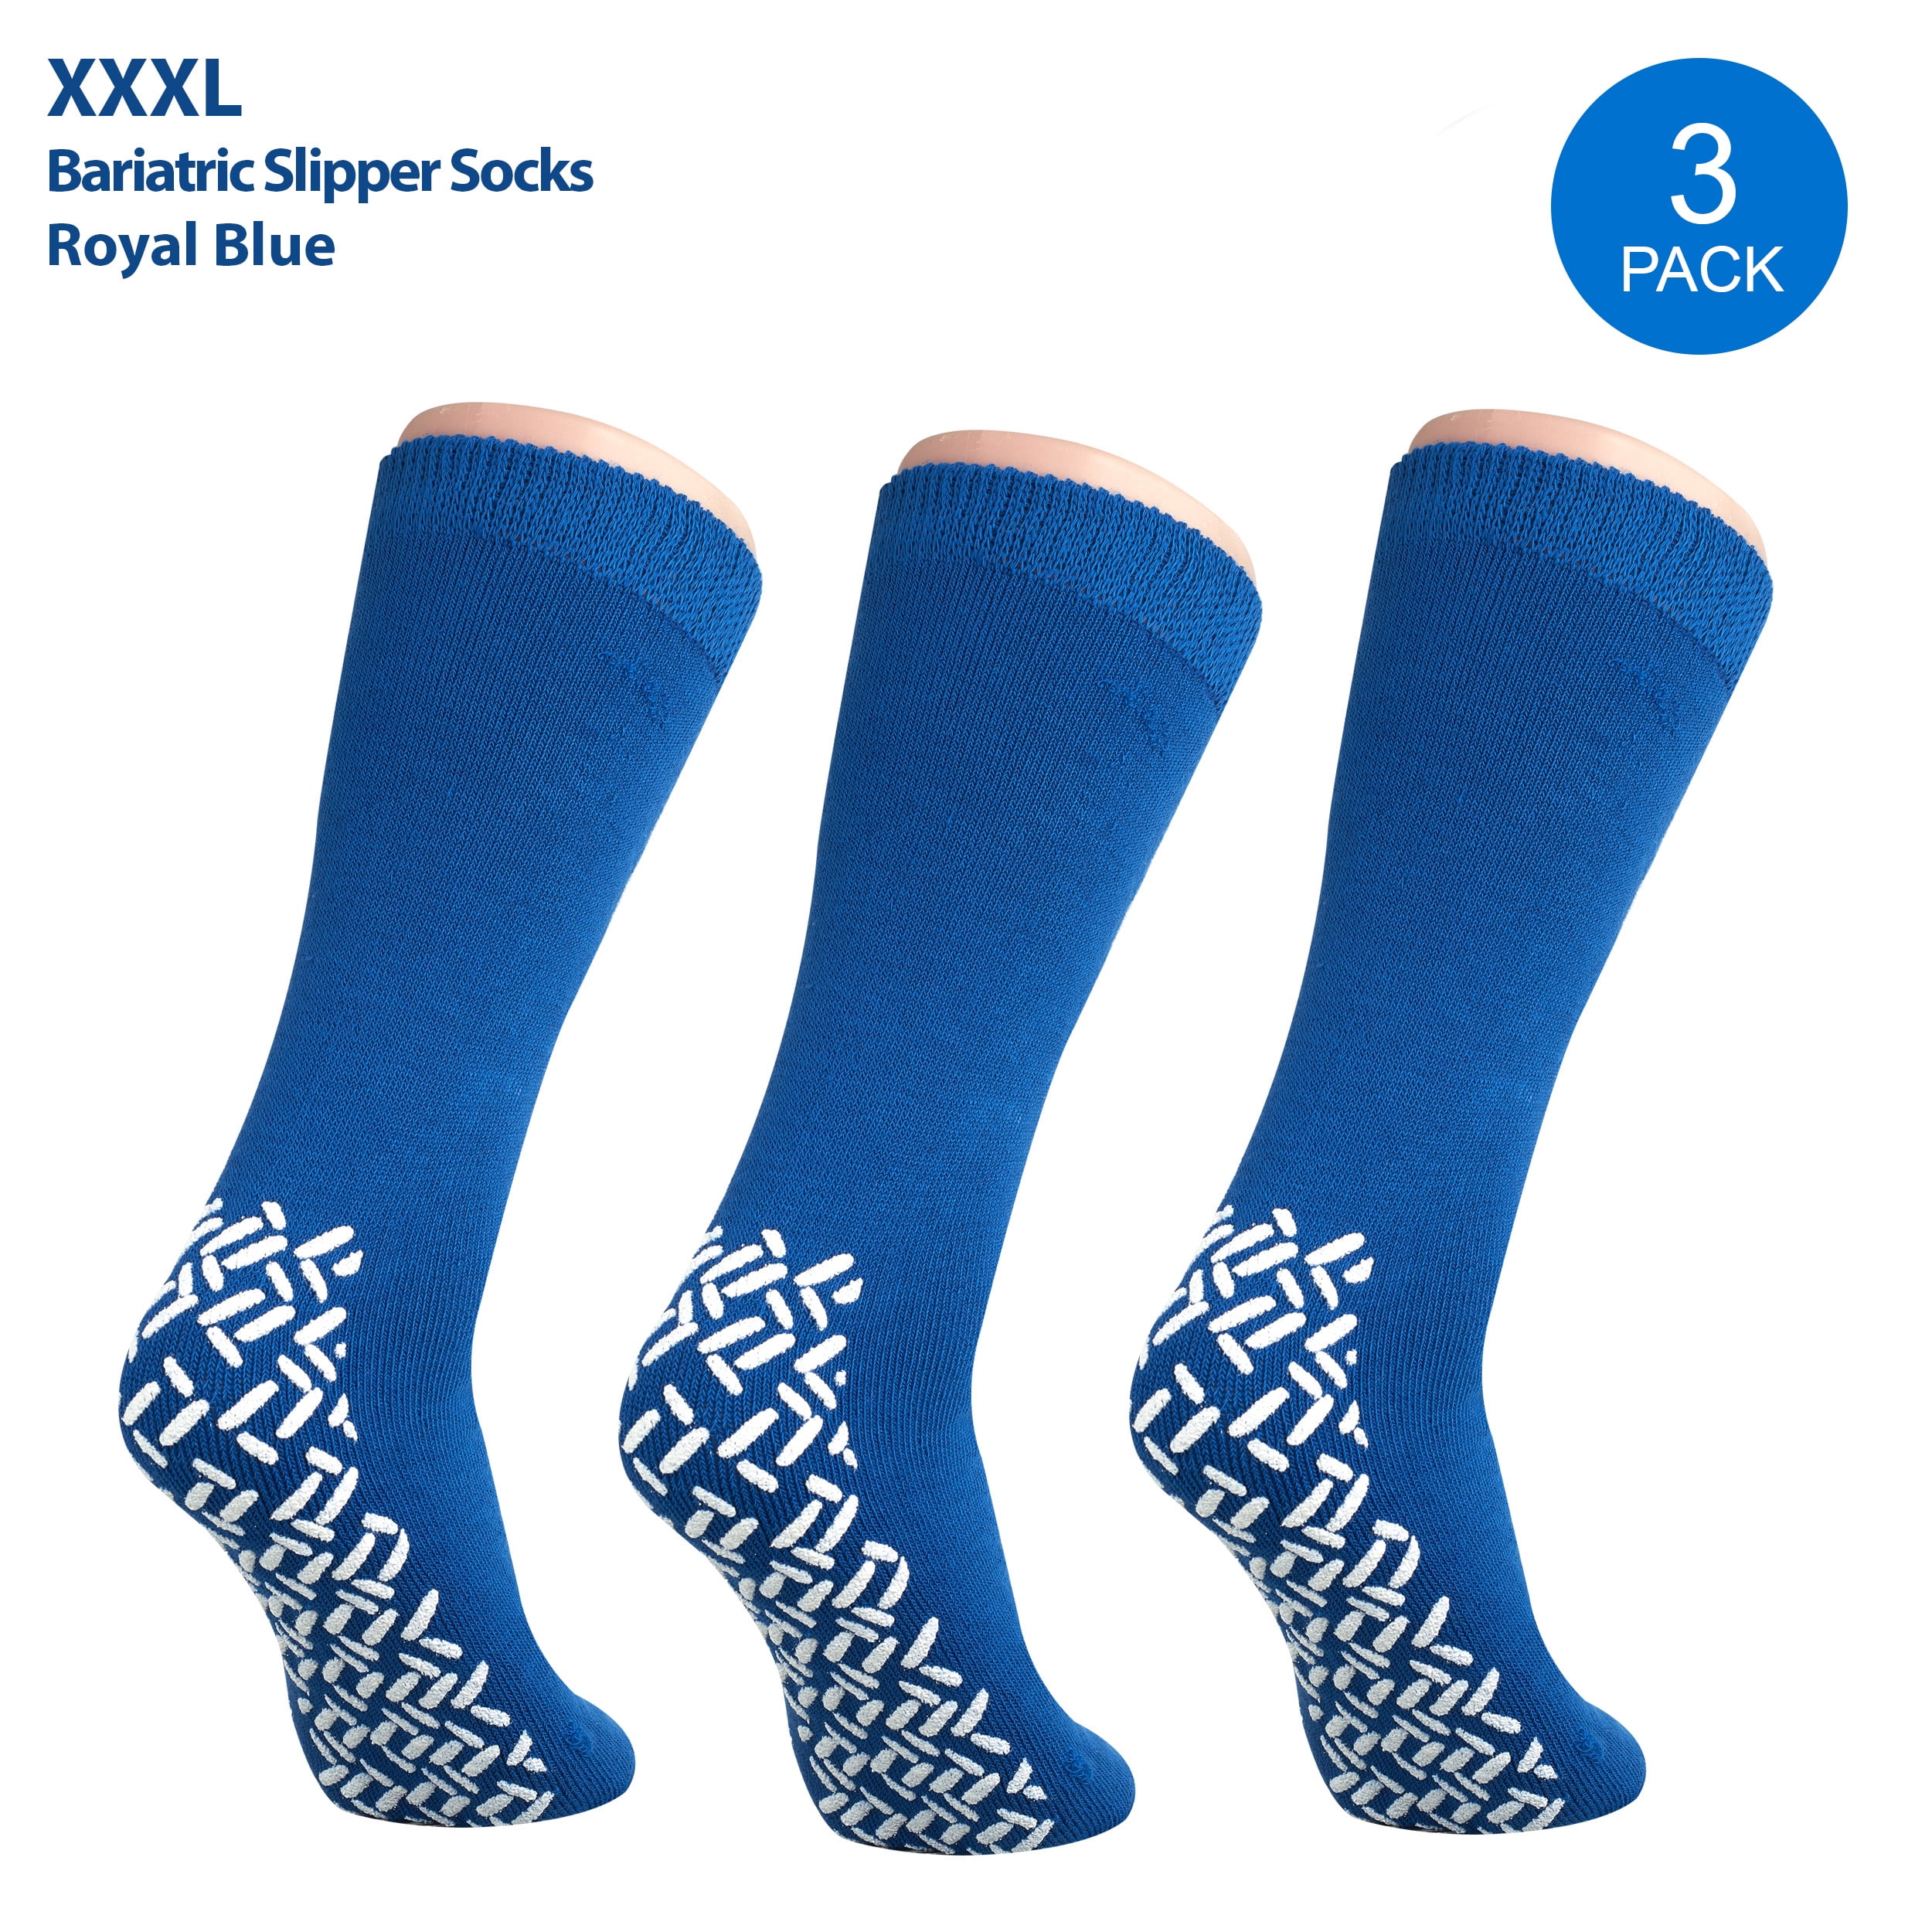 Pack of 3 Pairs - XXXL Non-Skid Bariatric Extra Wide Slipper Socks